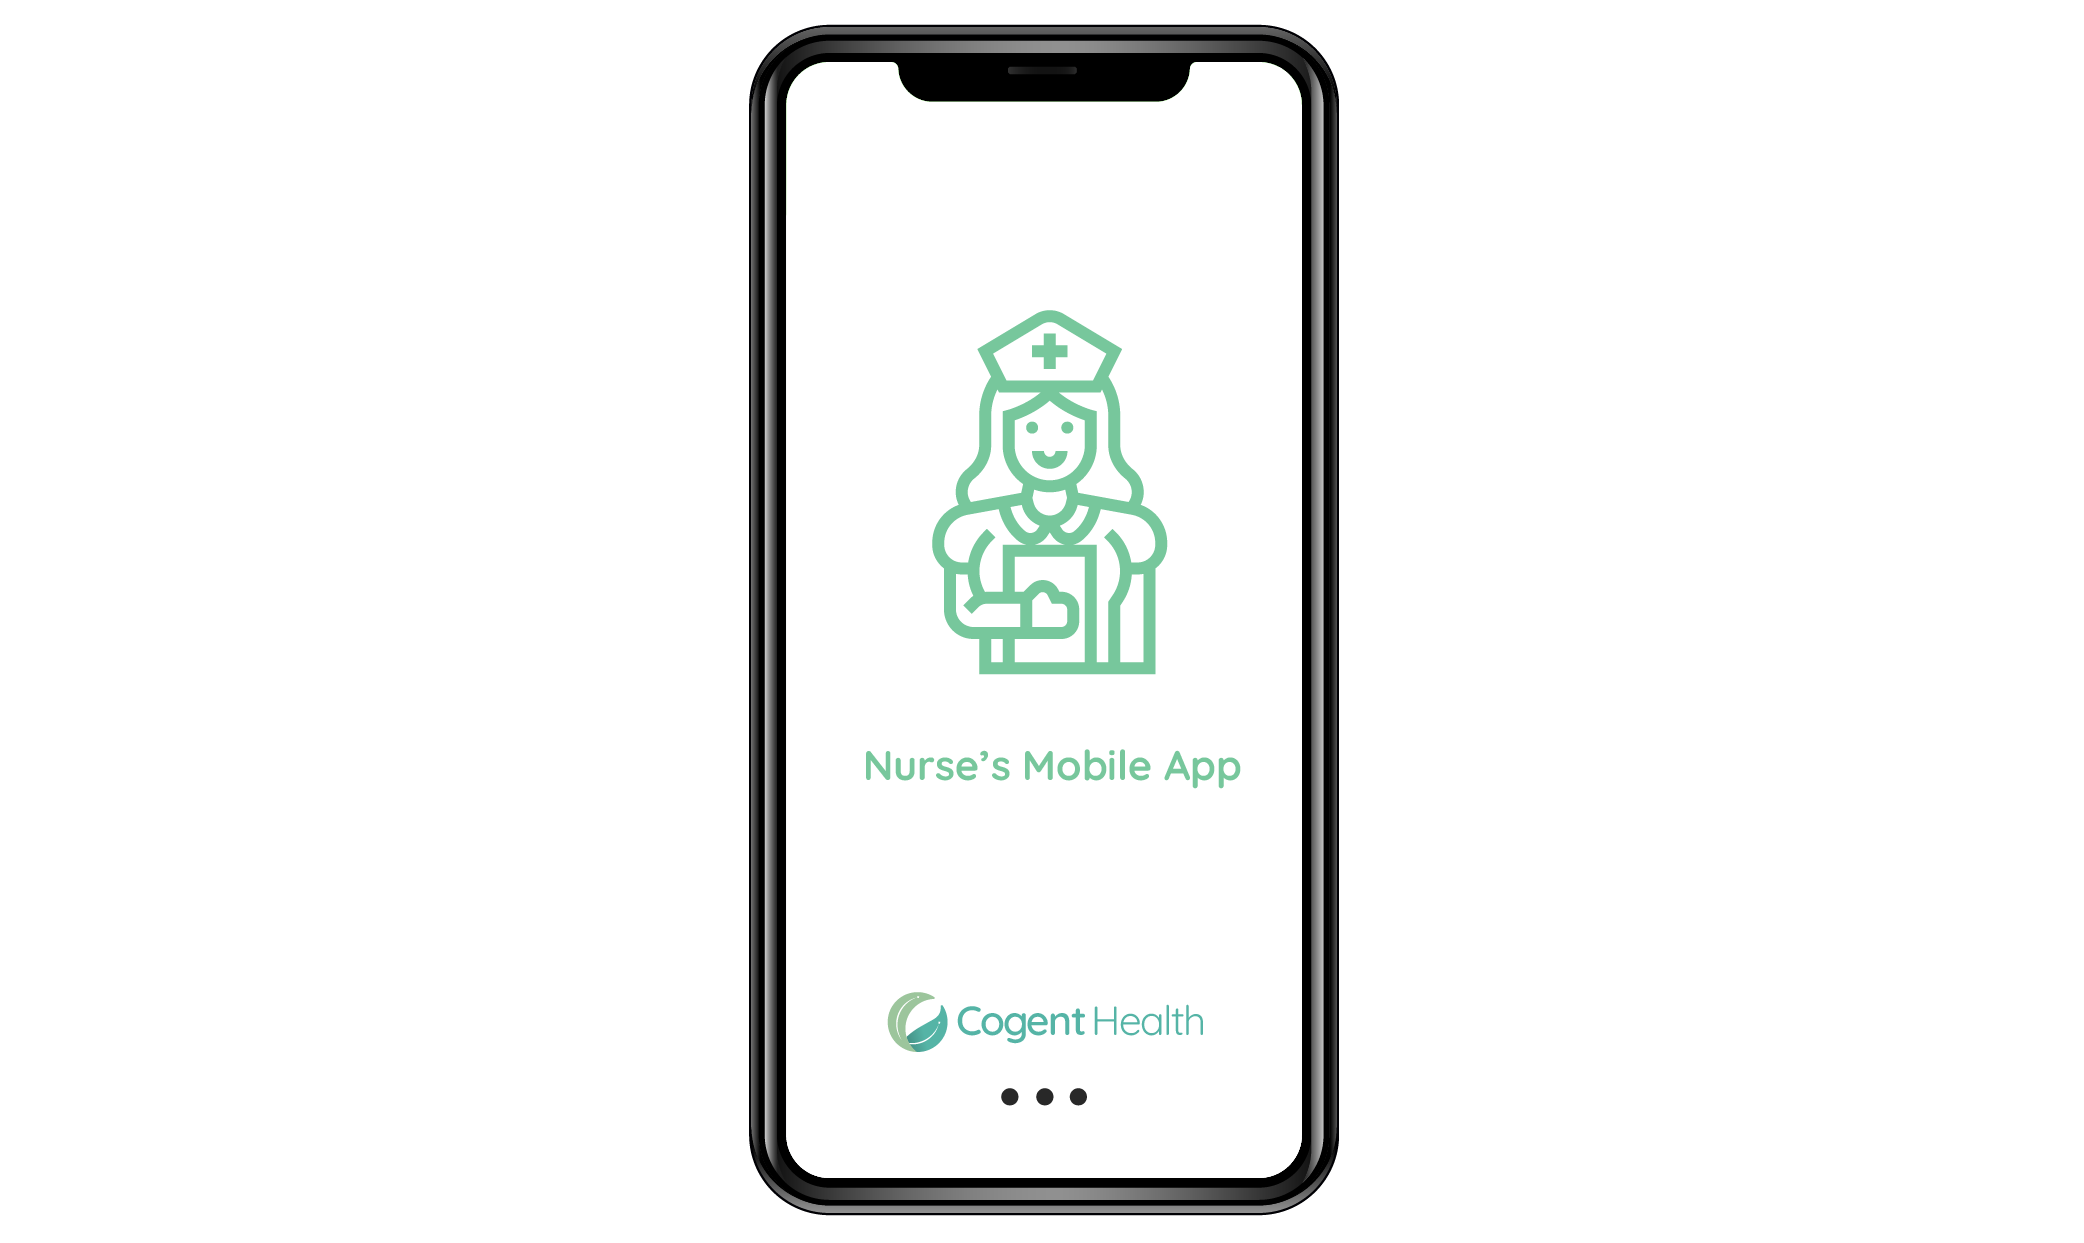 Nurse's Mobile Application Image